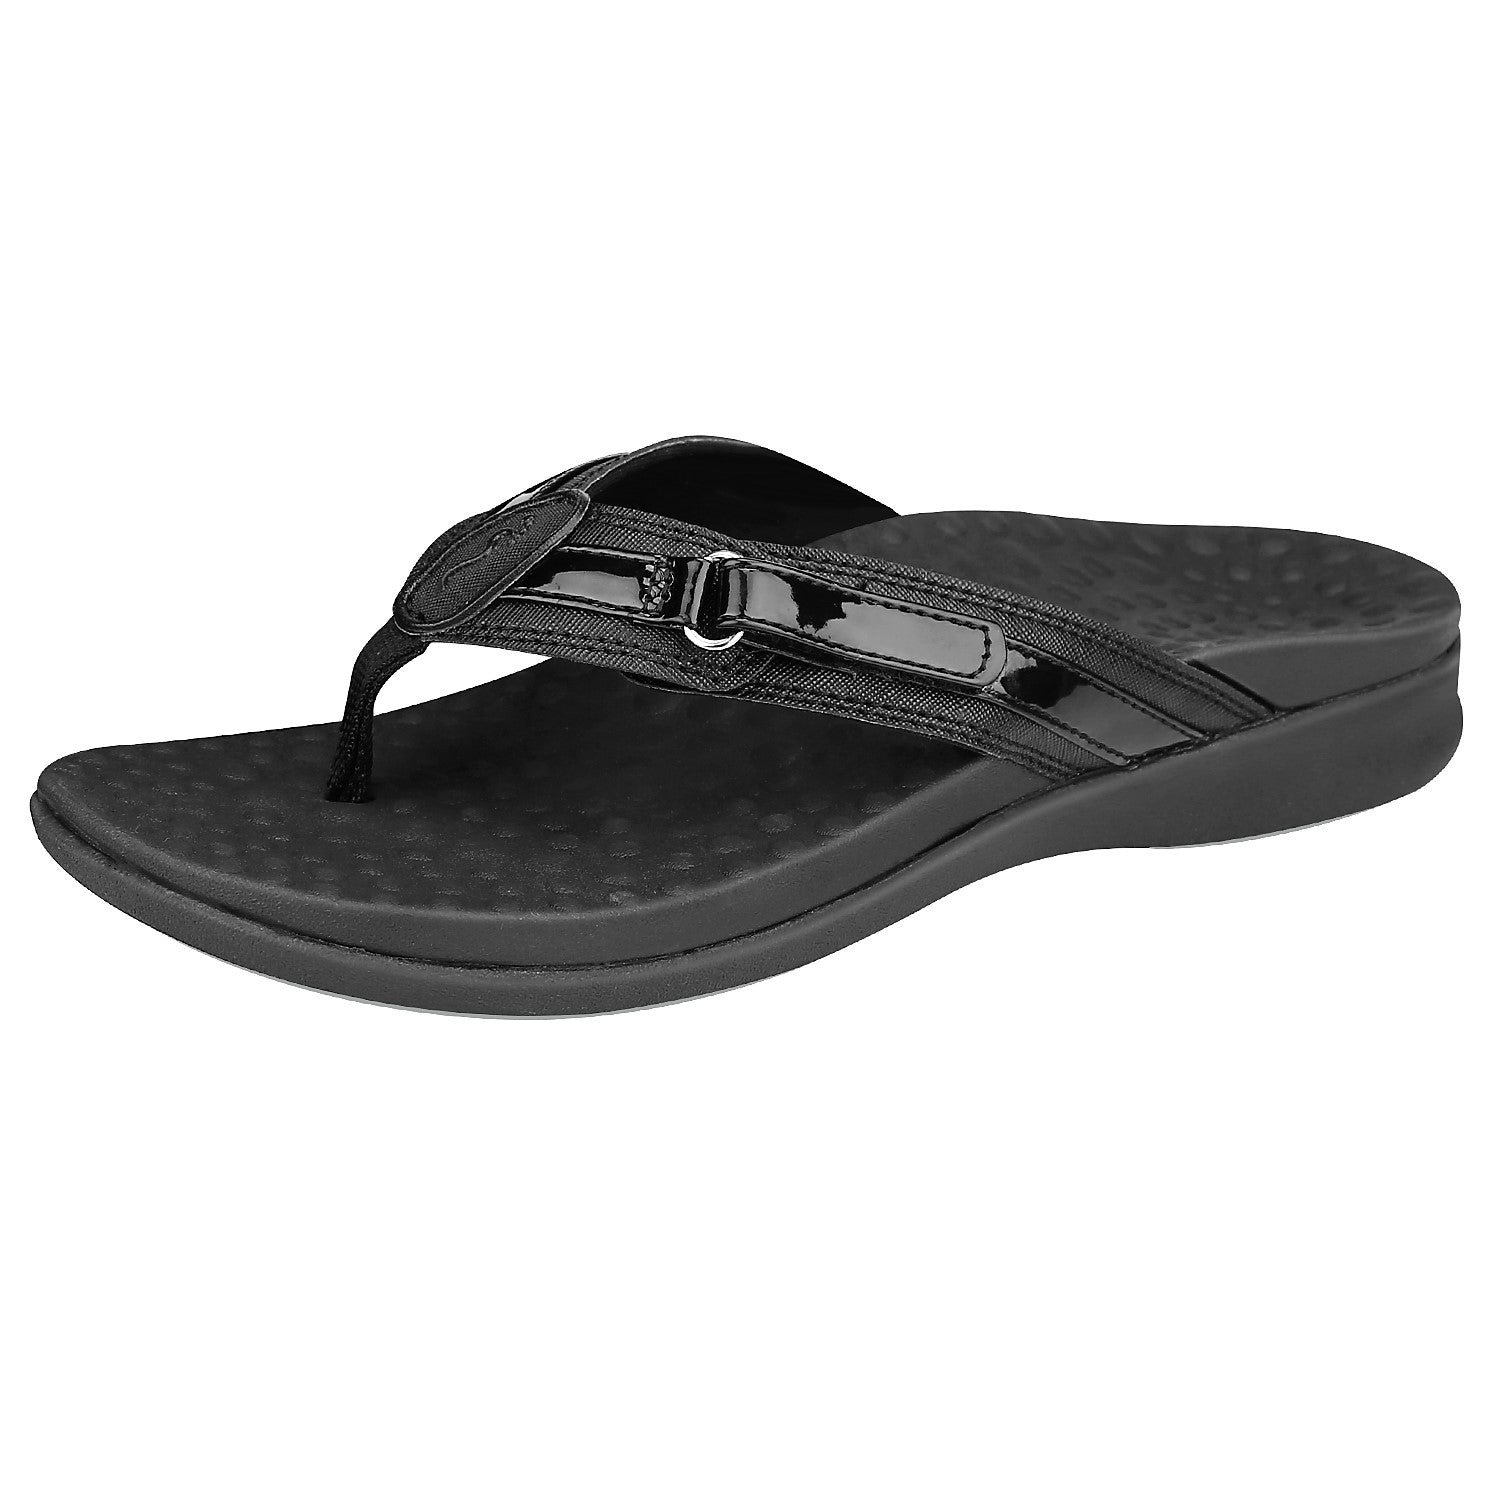 Footminders SEYMOUR Women's Orthotic Sandals - Black